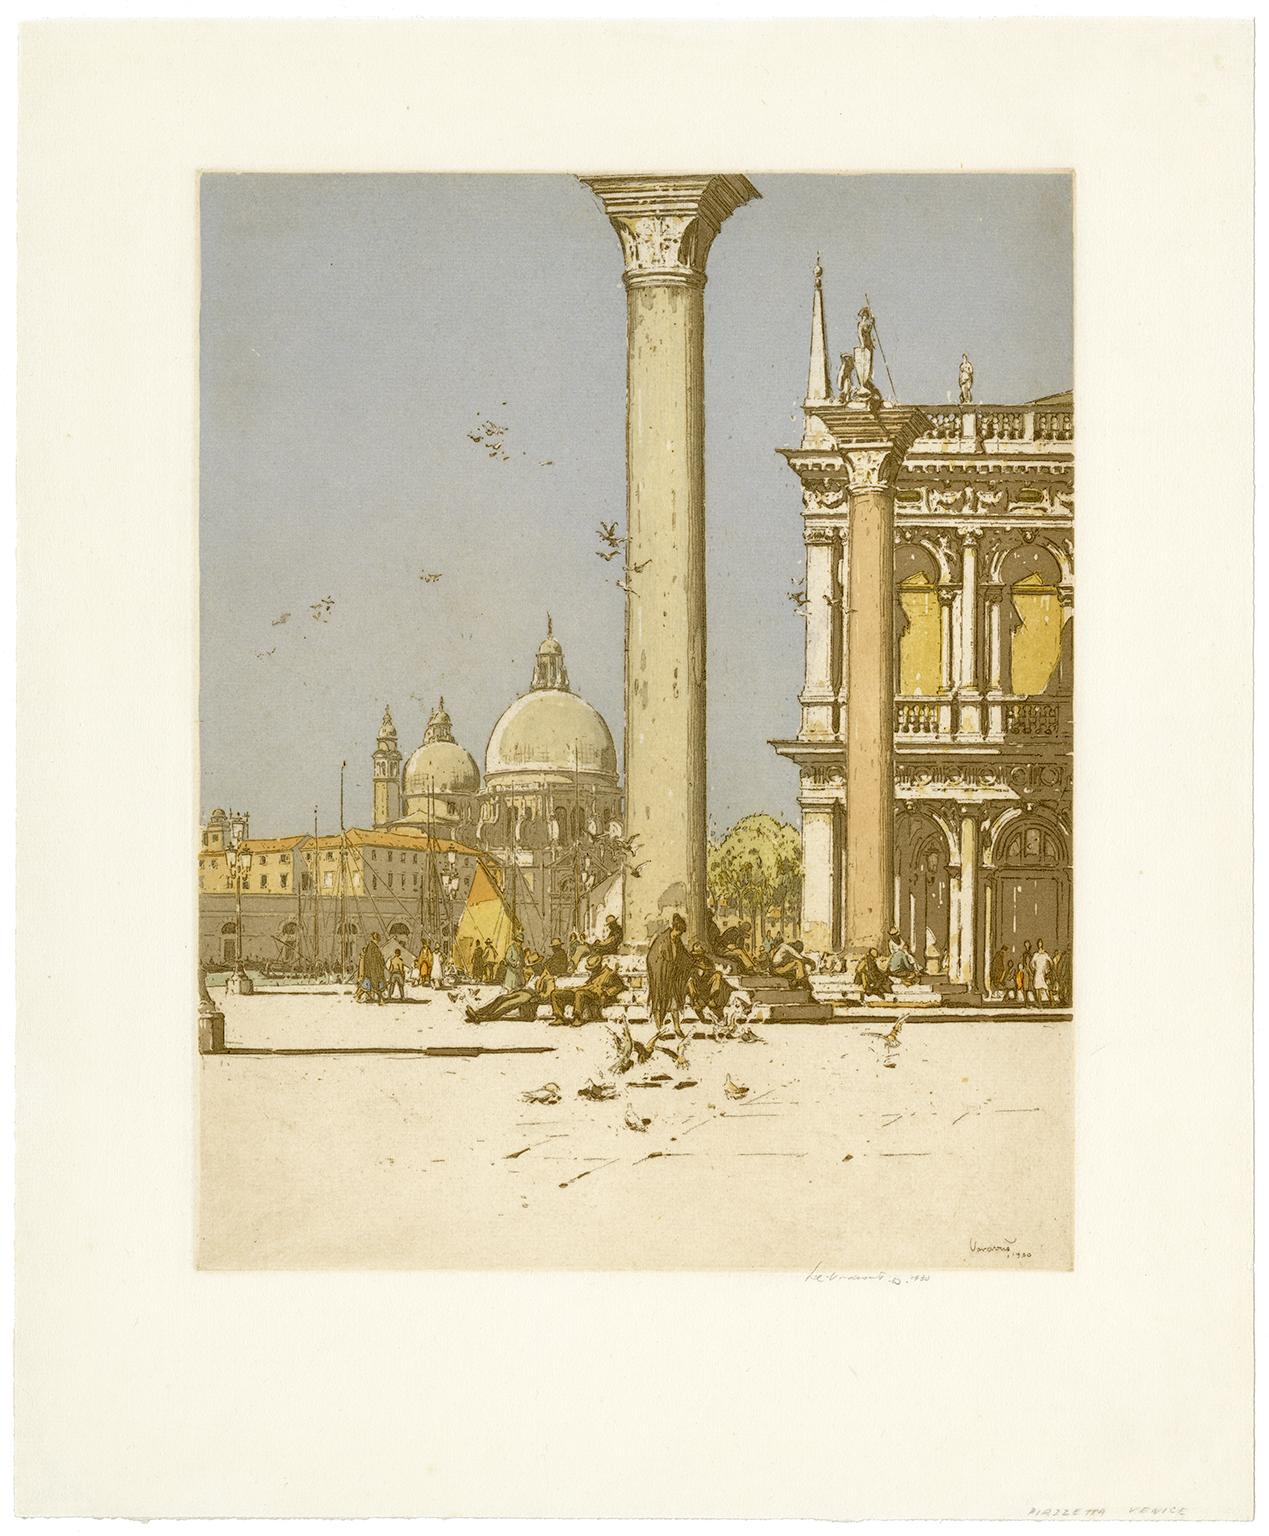 Piazzetta, Venice - Print by Jan C. Vondrous